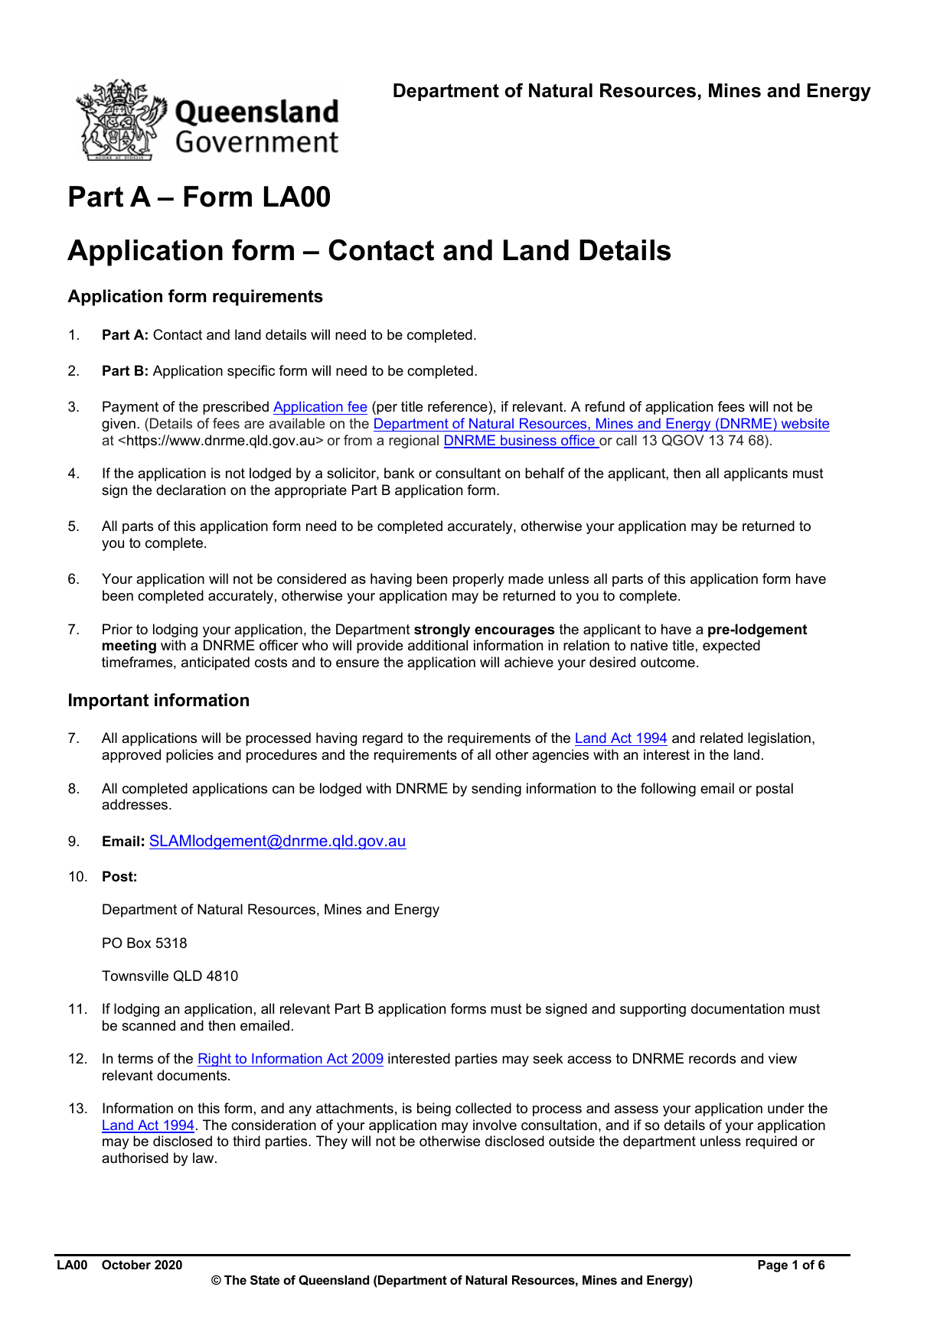 Form LA00 Part A Application Form - Contact and Land Details - Queensland, Australia, Page 1